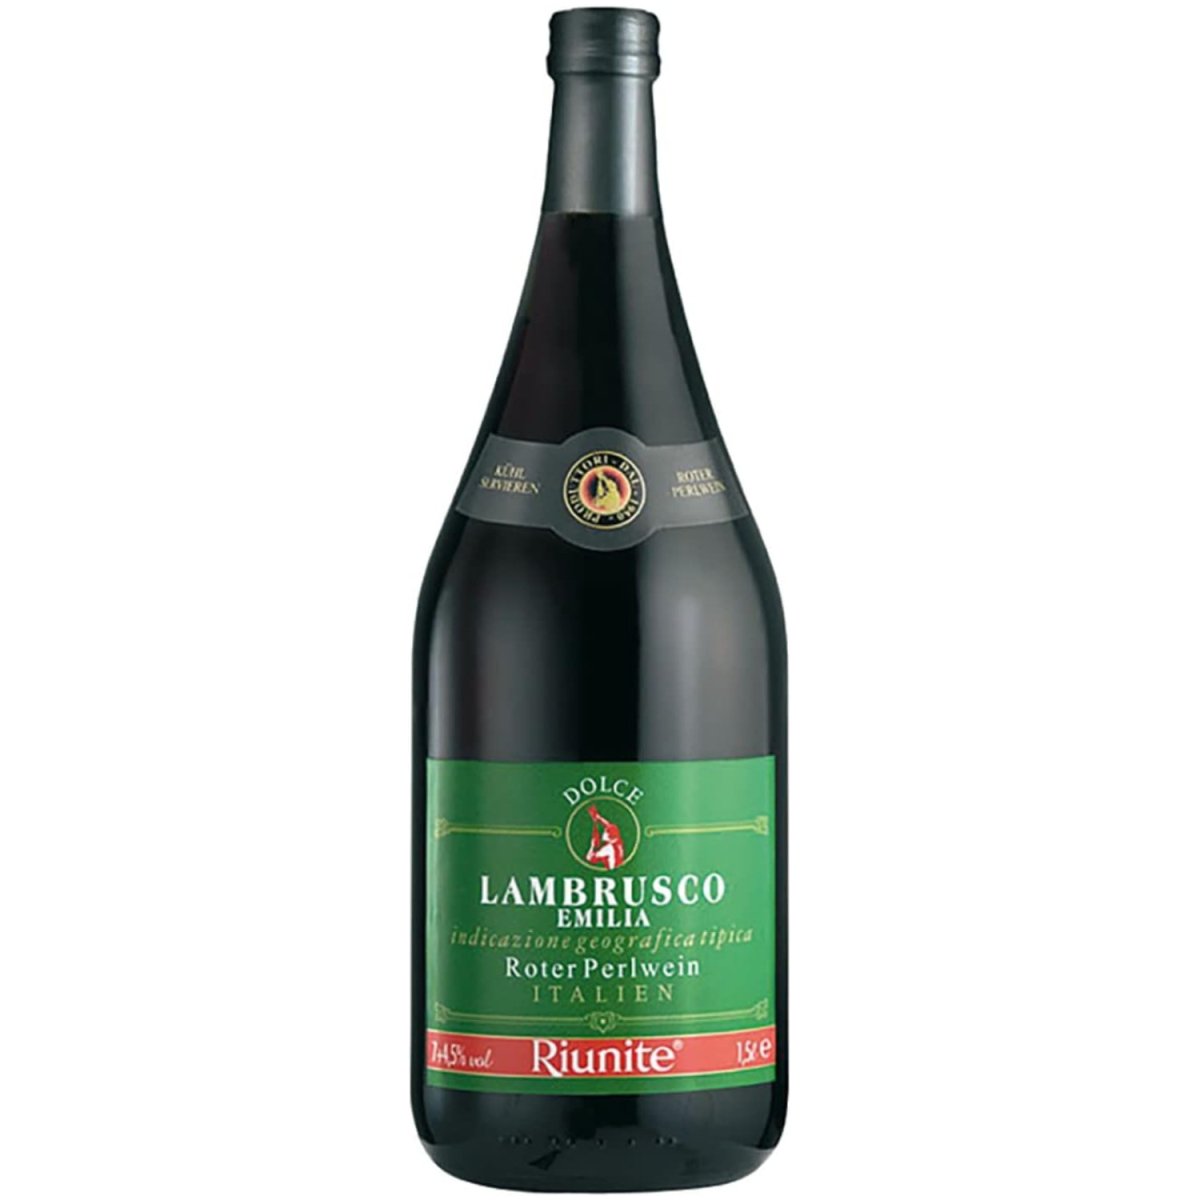 Lambrusco Superiore Cantine Riunite Magnum Rotwein Wein Italien (6 x 1,5l) - Versanel -